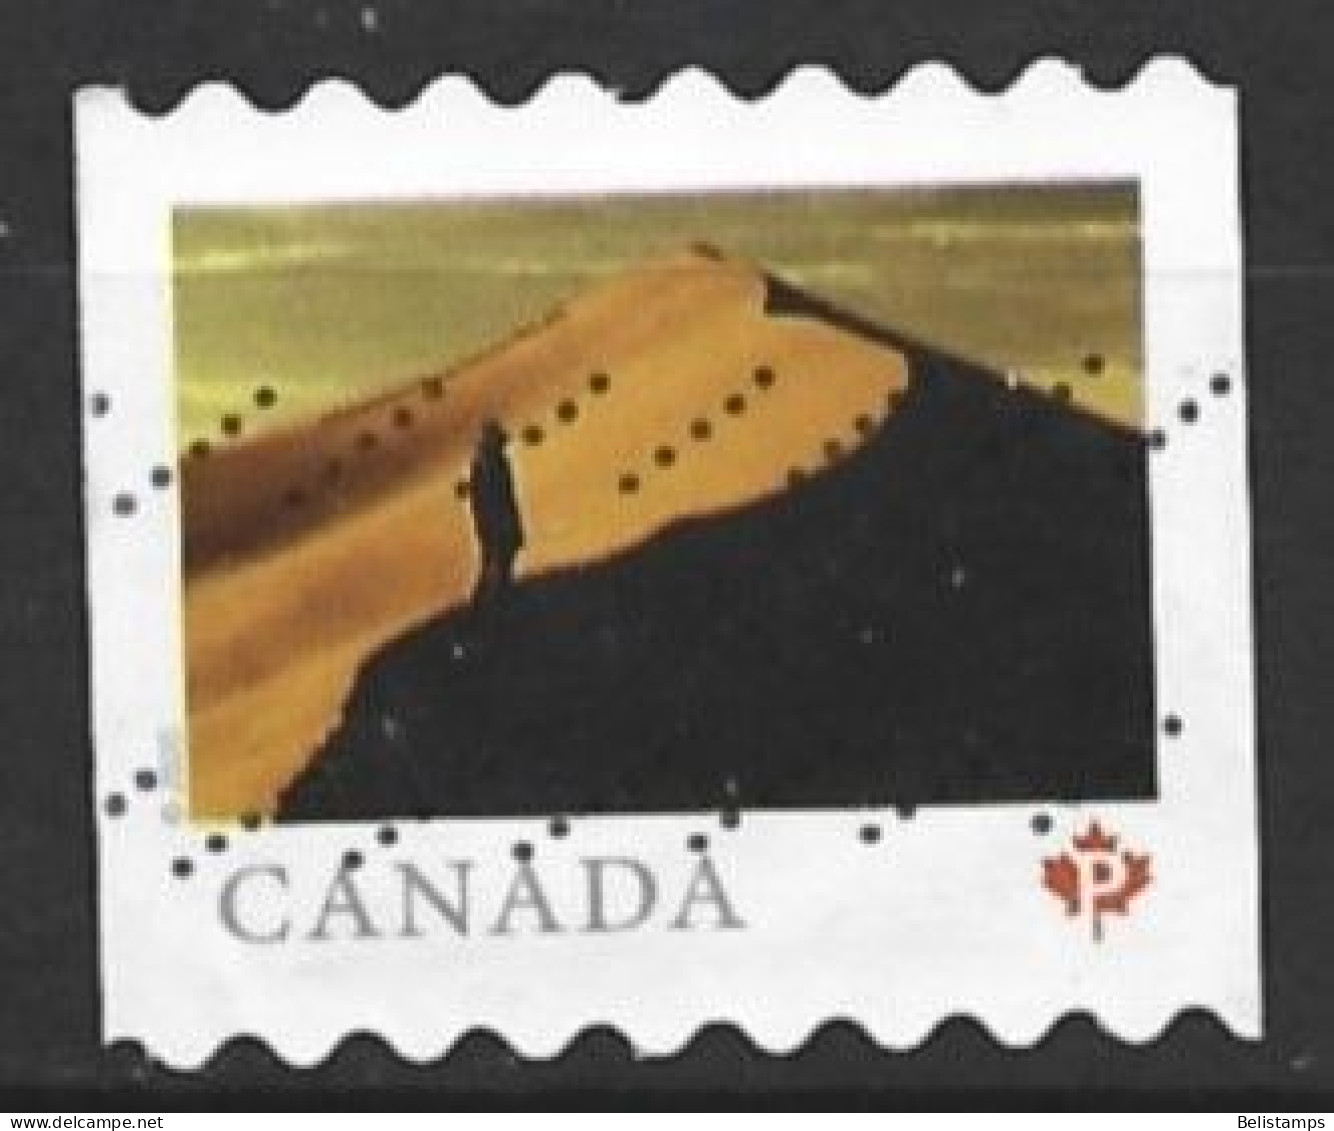 Canada 2020. Scott #3213 (U) Athabasca Sand Dunes, Provincial Park, Saskatchewan - Used Stamps